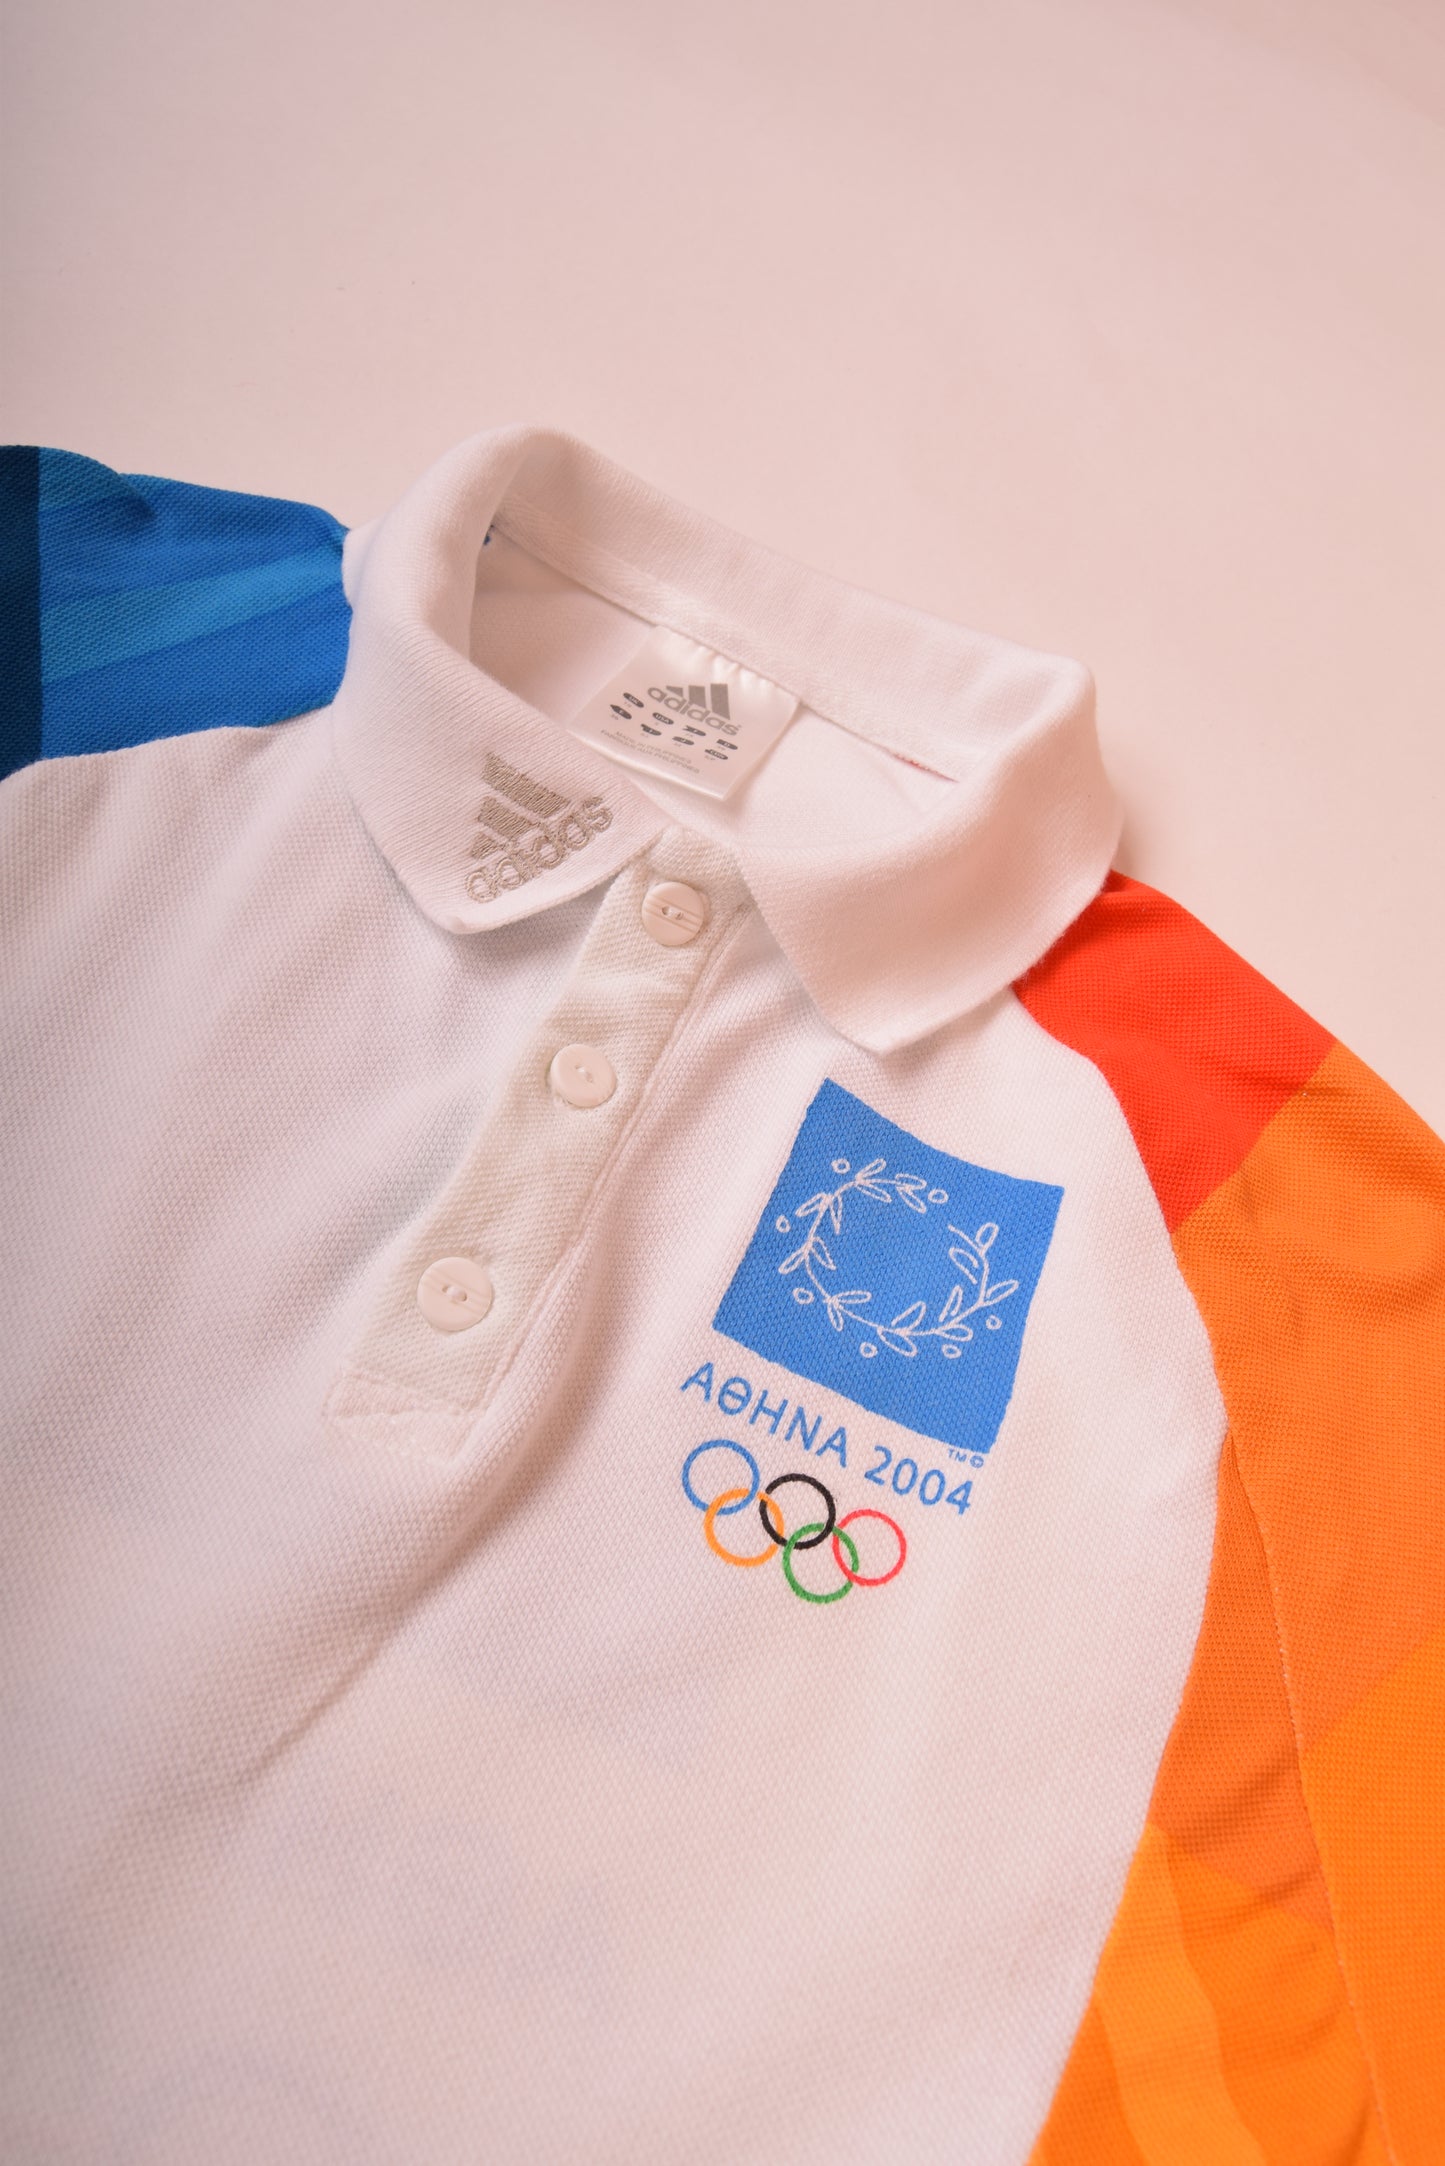 Adidas Polo Shirt Athens 2004 Olympic Games 100% Cotton